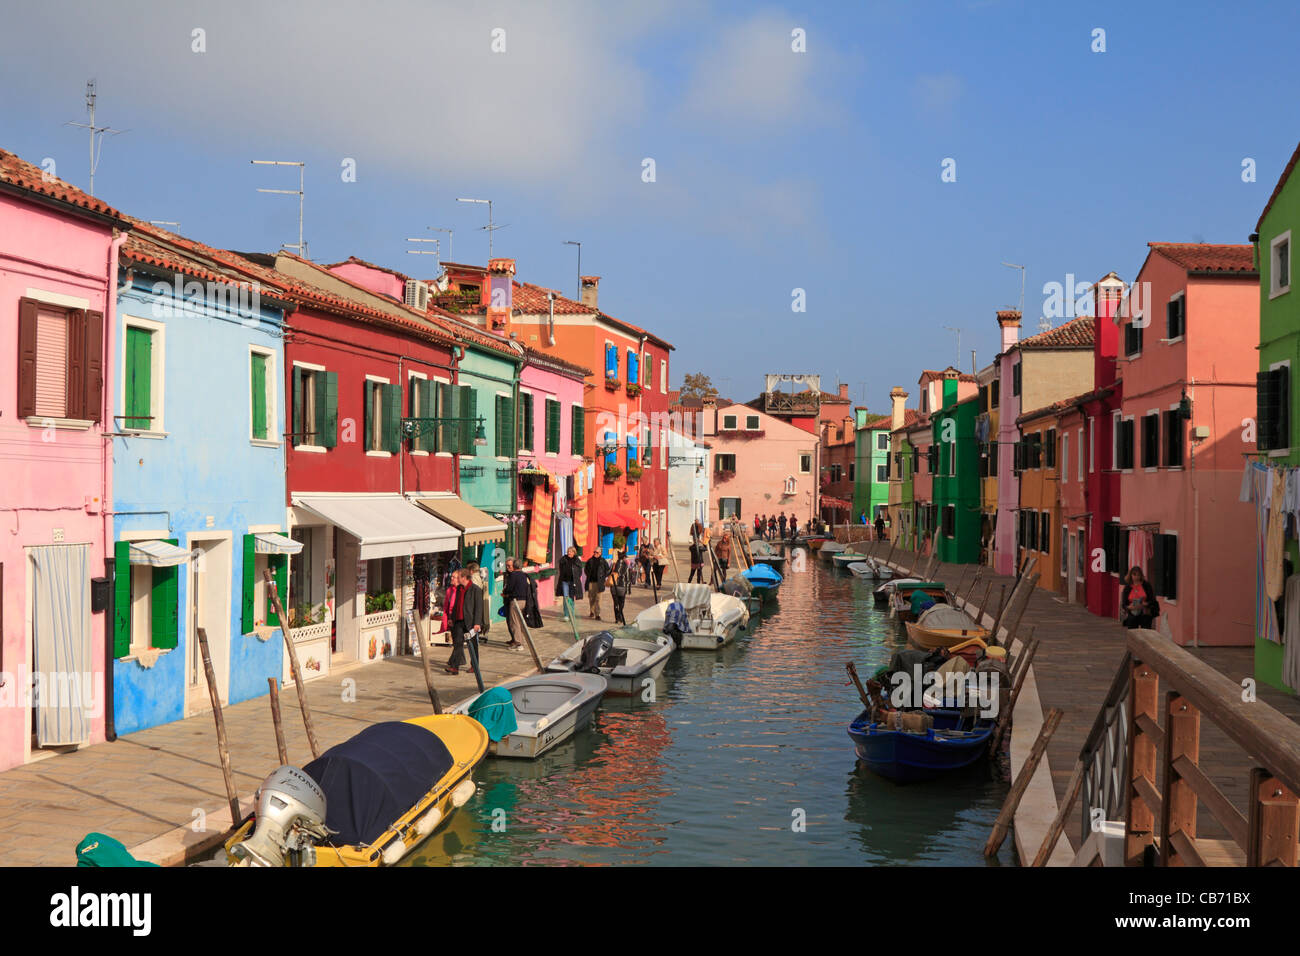 Bunt bemalte Häuser an einem Kanal, Burano, Venedig, Italien, Europa. Stockfoto